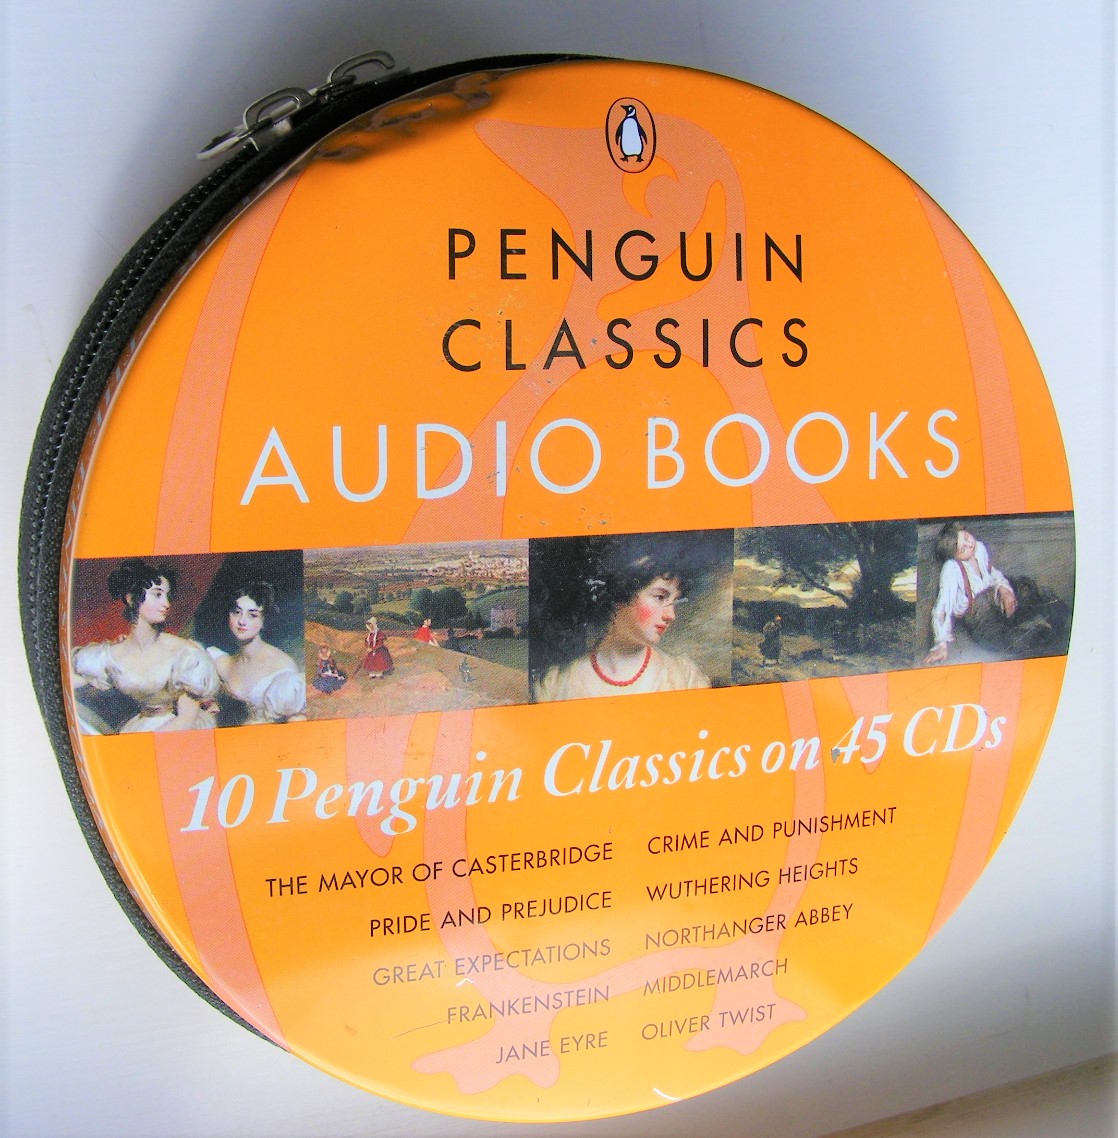 10 Penguin Classics on 45 CDs Audio Books in Storage Tin